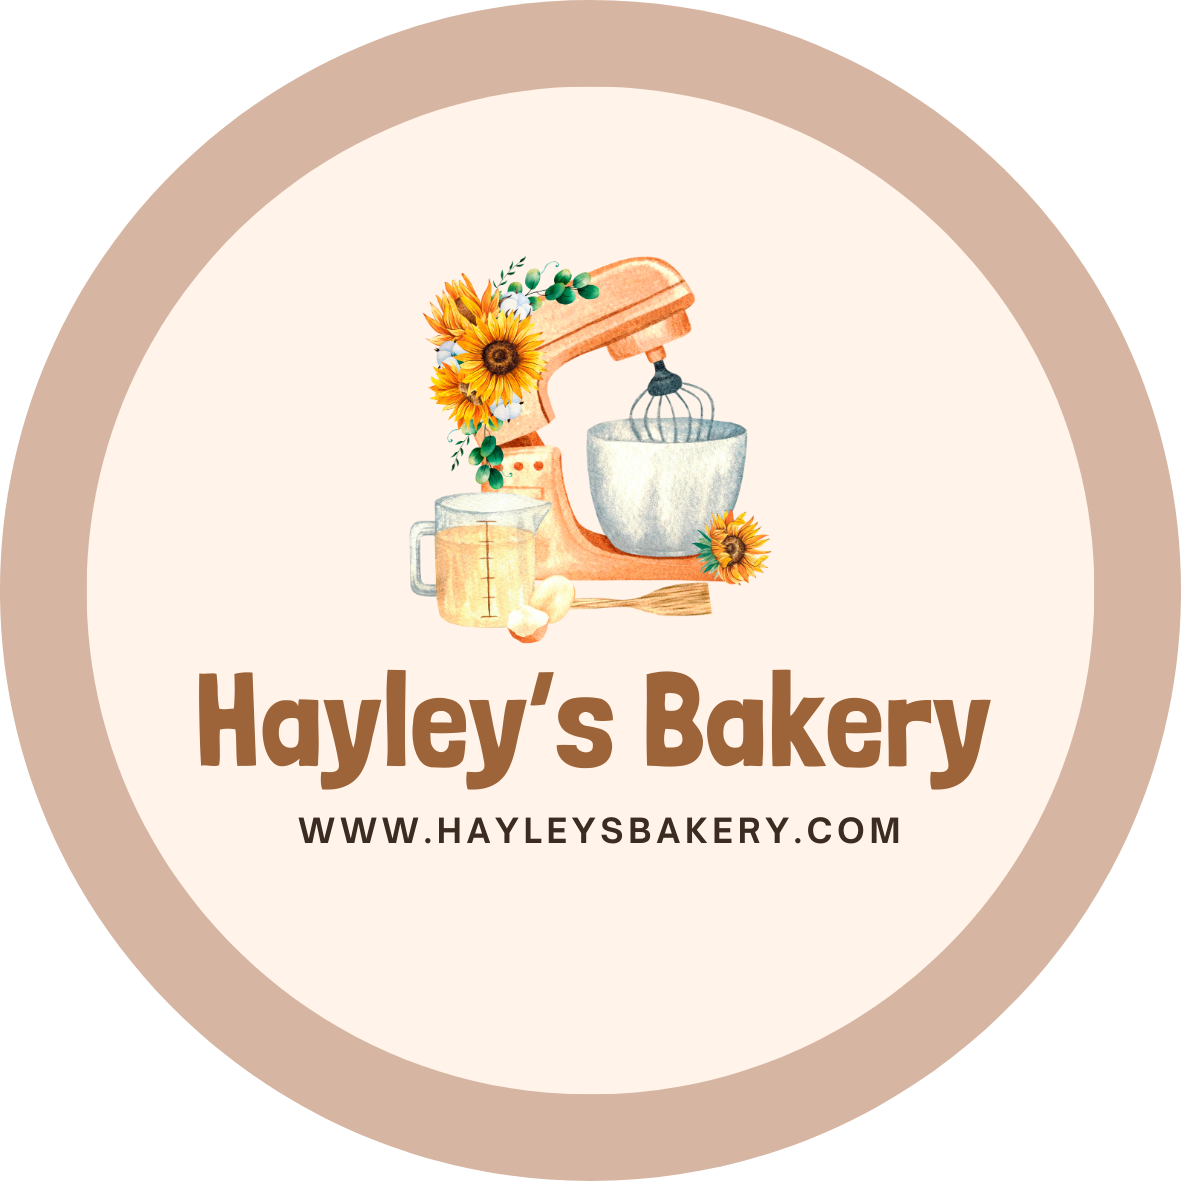 Hayley's Bakery